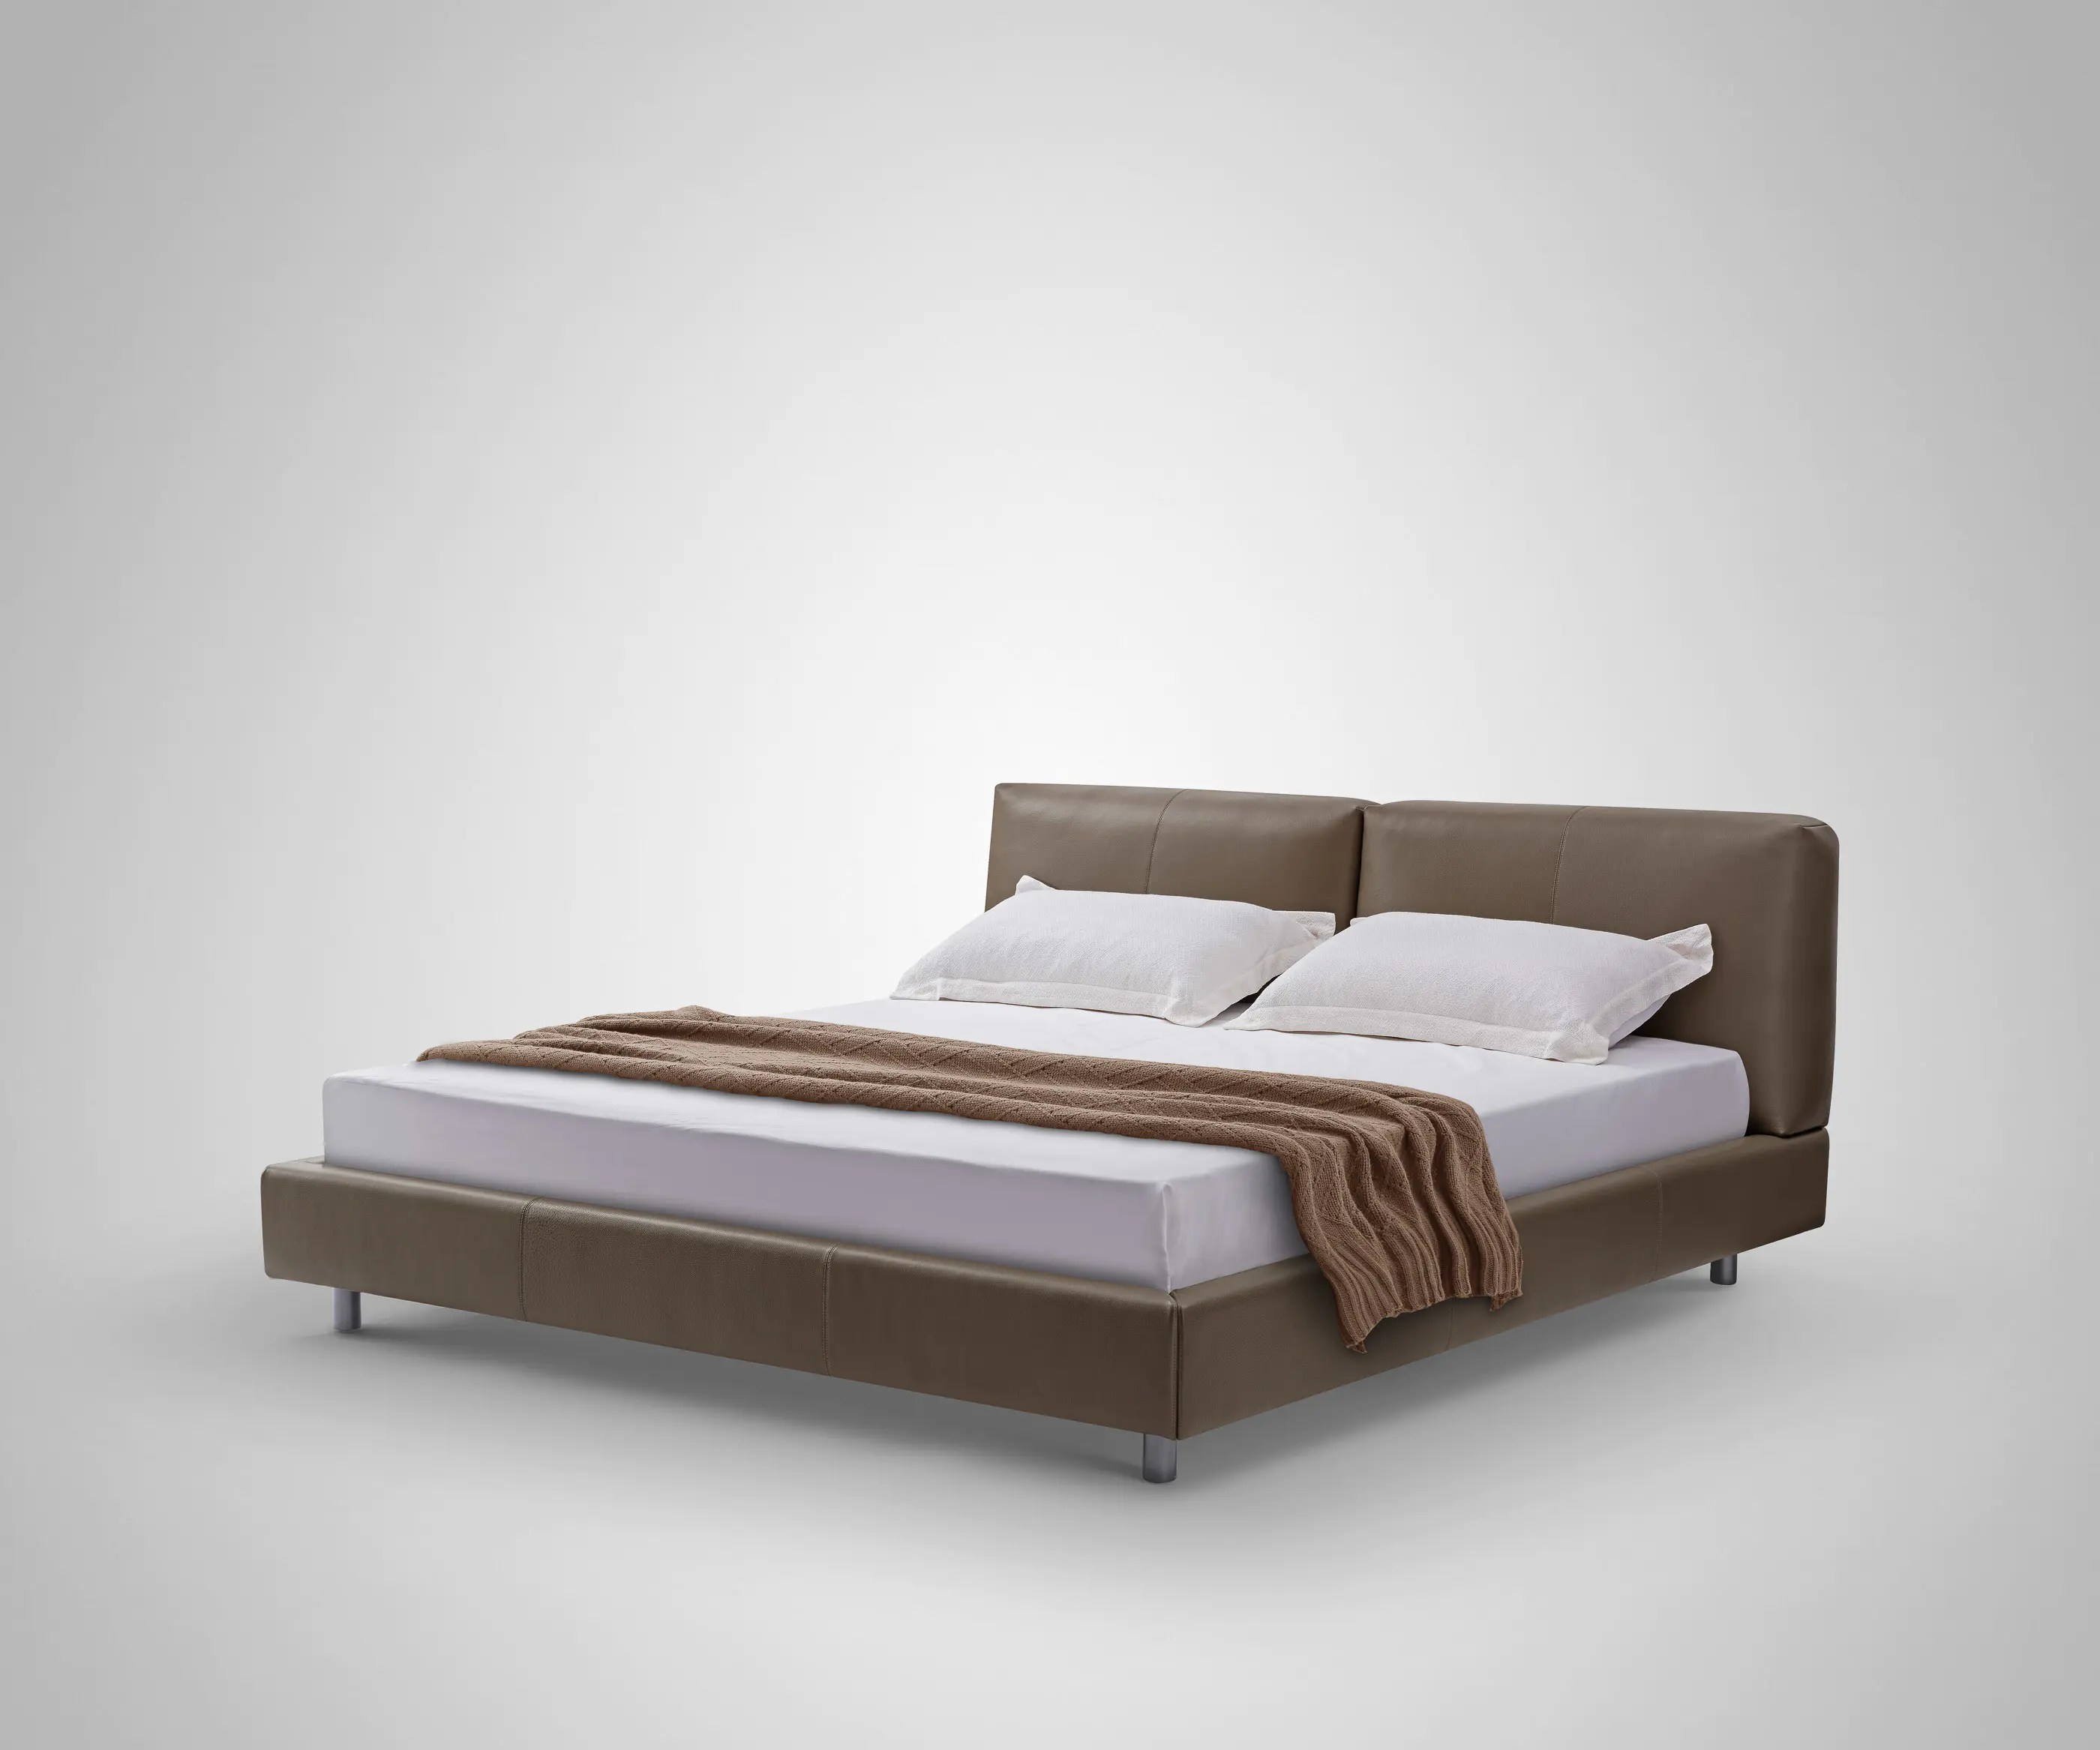 Italian Design Luxury Bedroom Furniture Set Modern Upholstered Leather Bedroom Bed